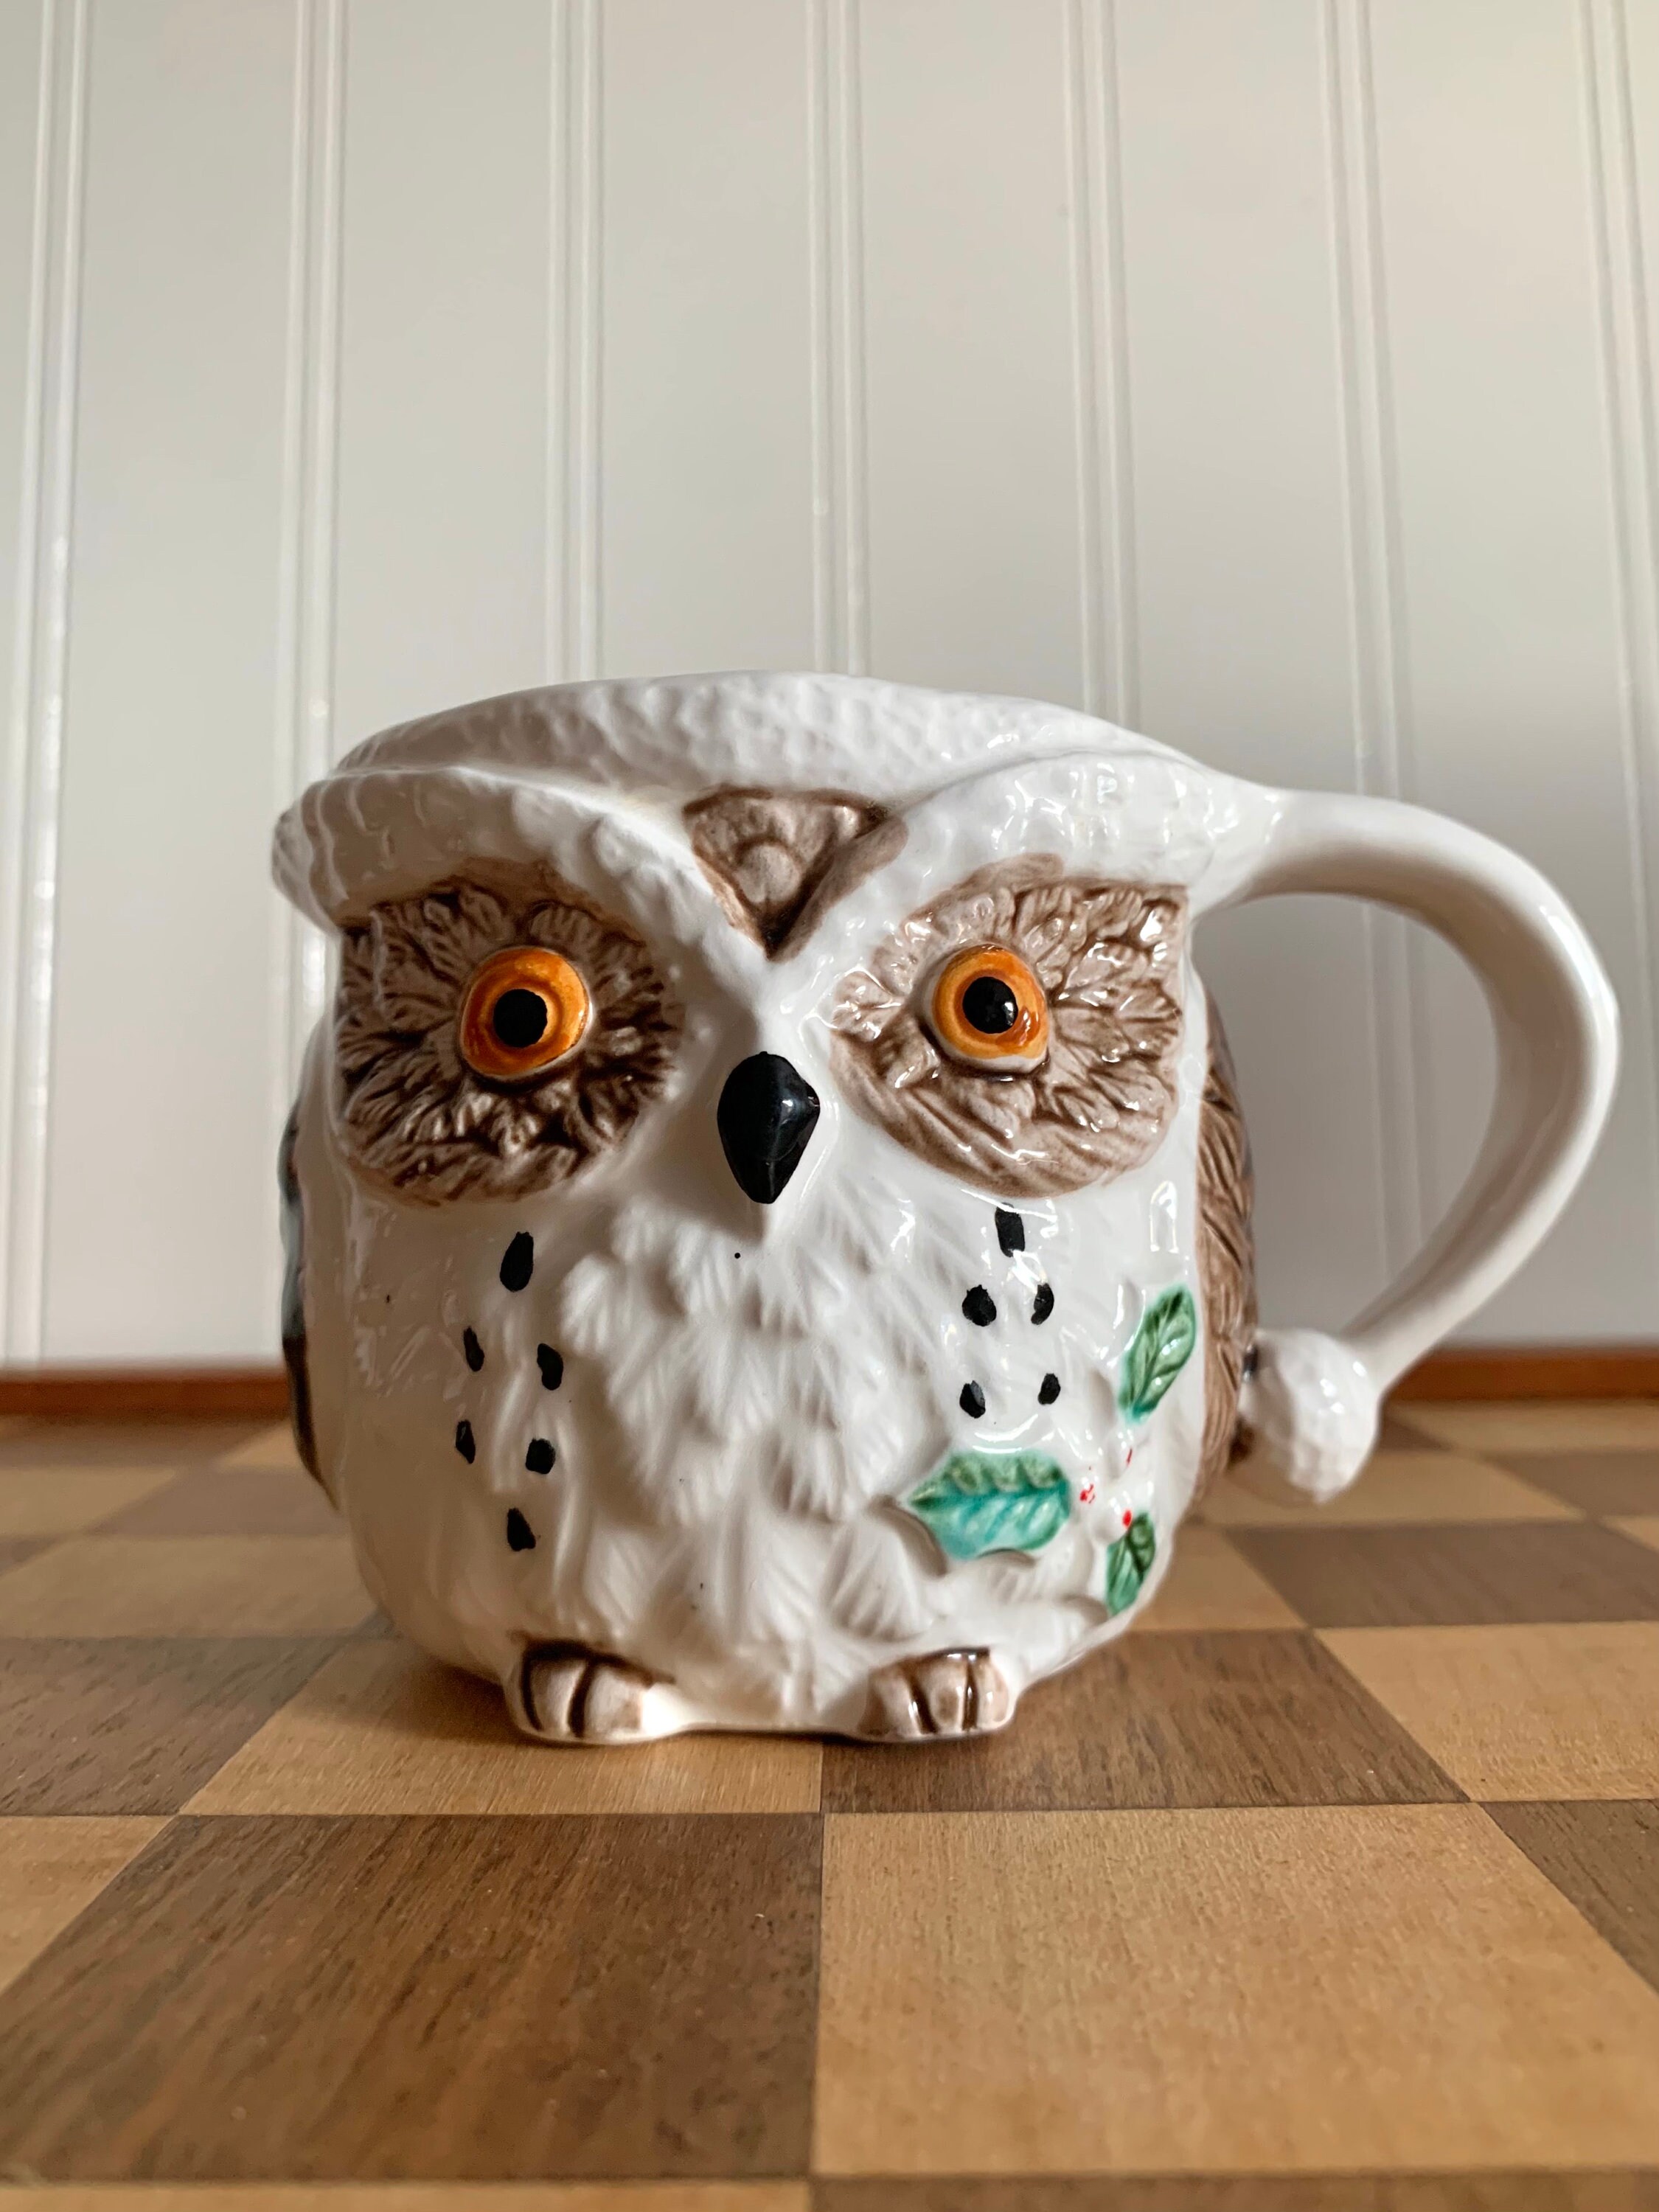 Owl Always Love You - Cute Owl Mug – Amy's Coffee Mugs